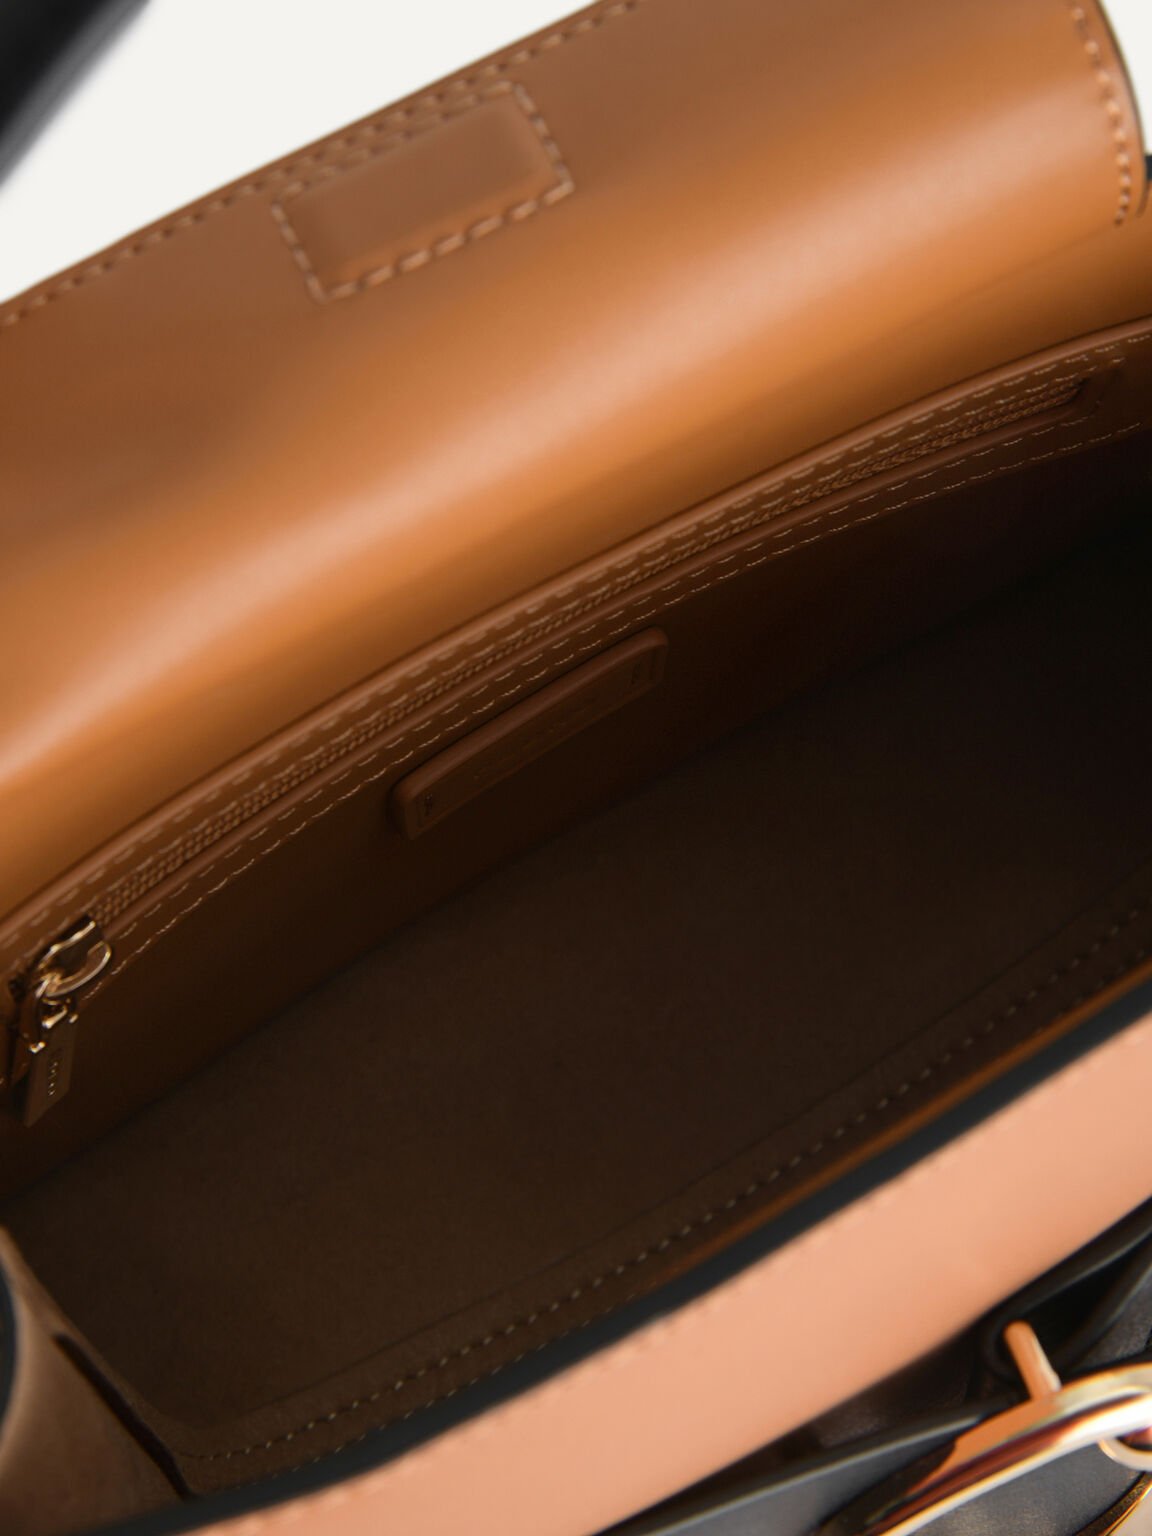 Leather Top Handle Bag, Multi2